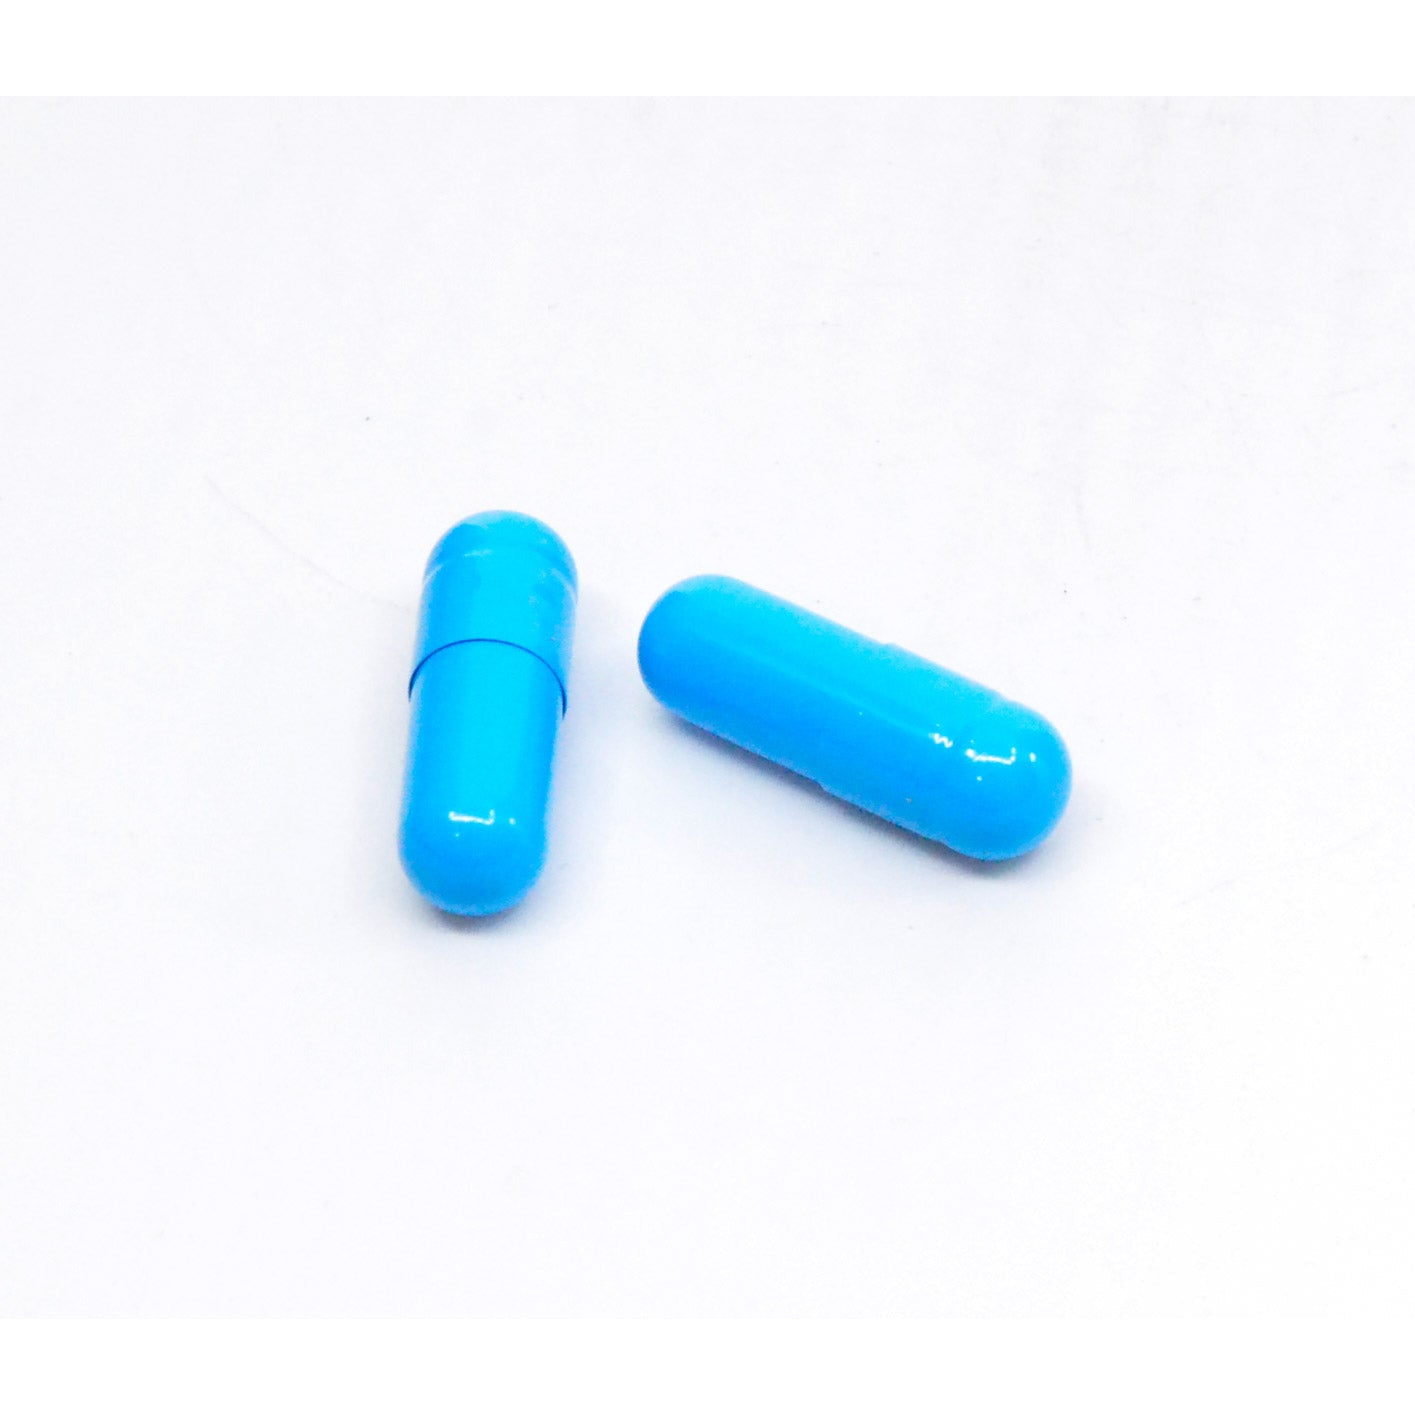 Size #0-Powder Blue/Powder Blue - Gelatin Capsules